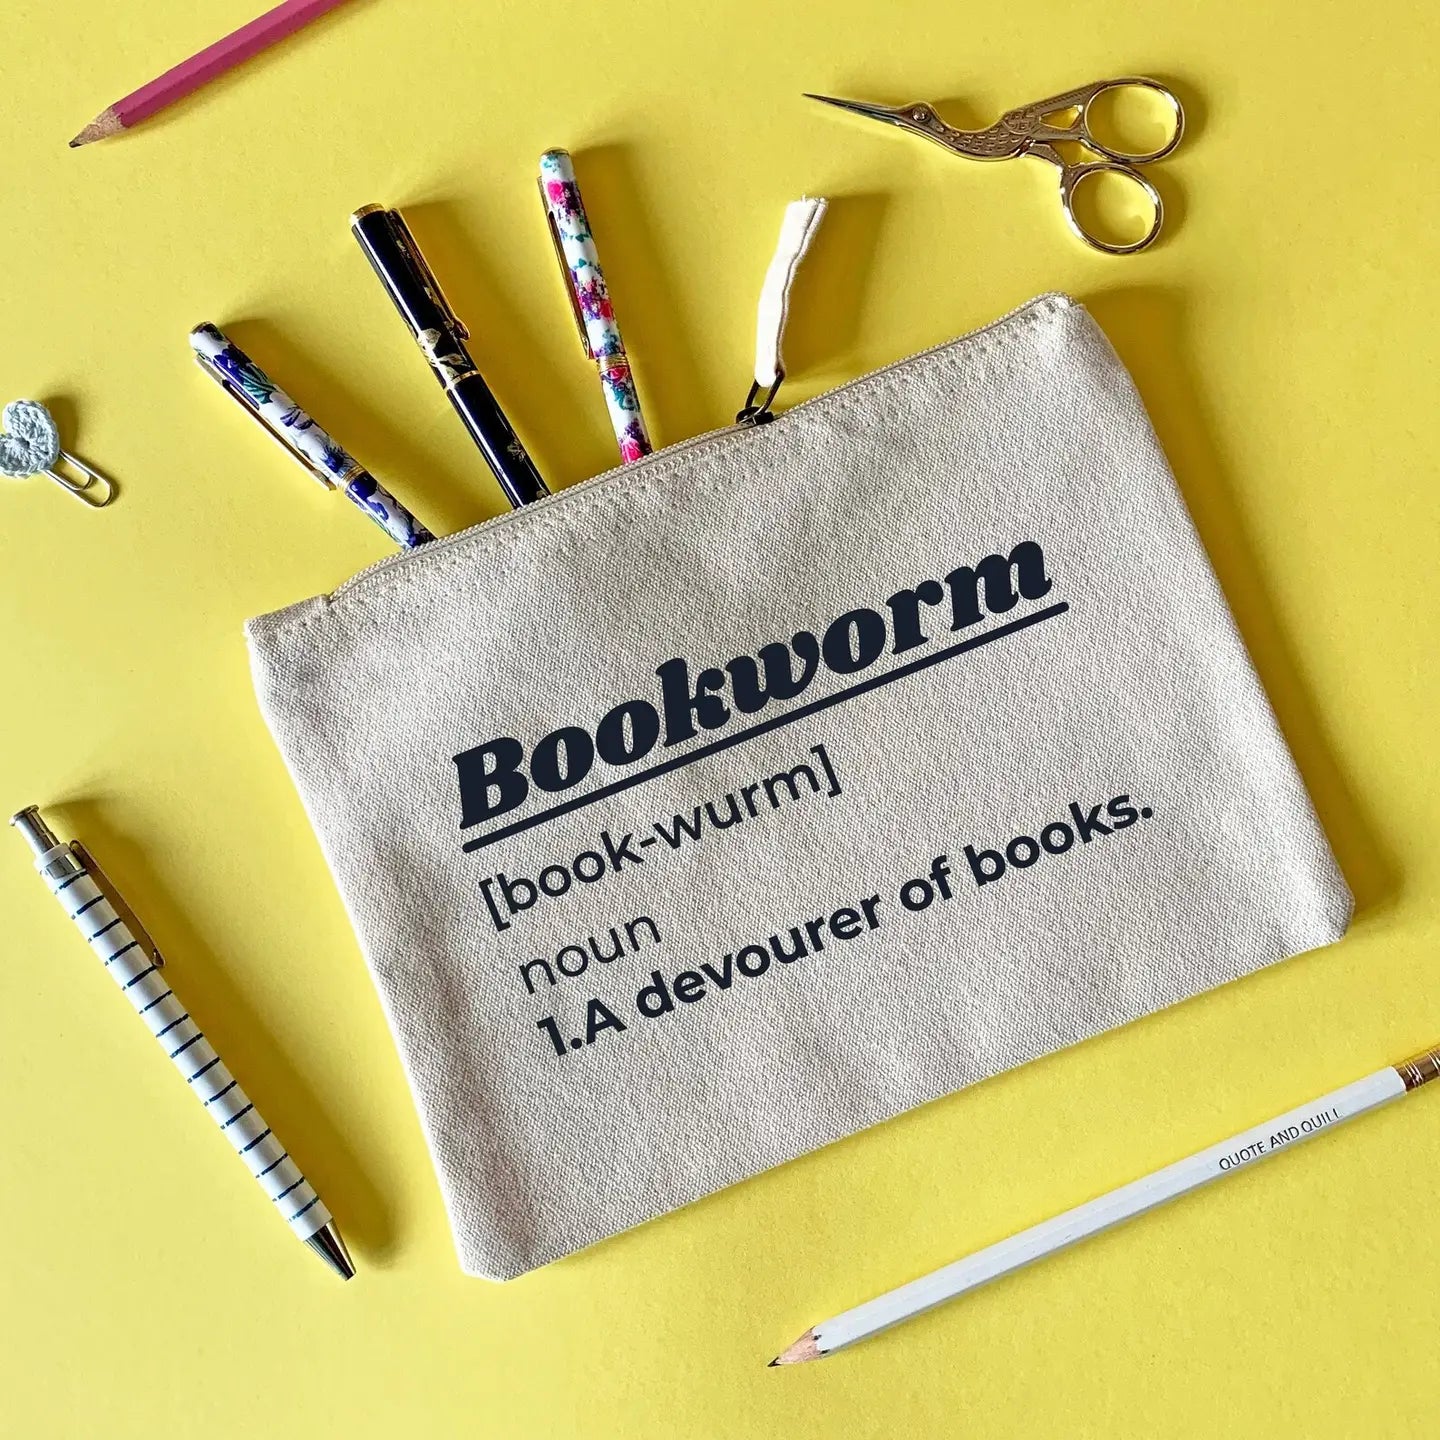 Bolsa de accesorios Bookworm Definition